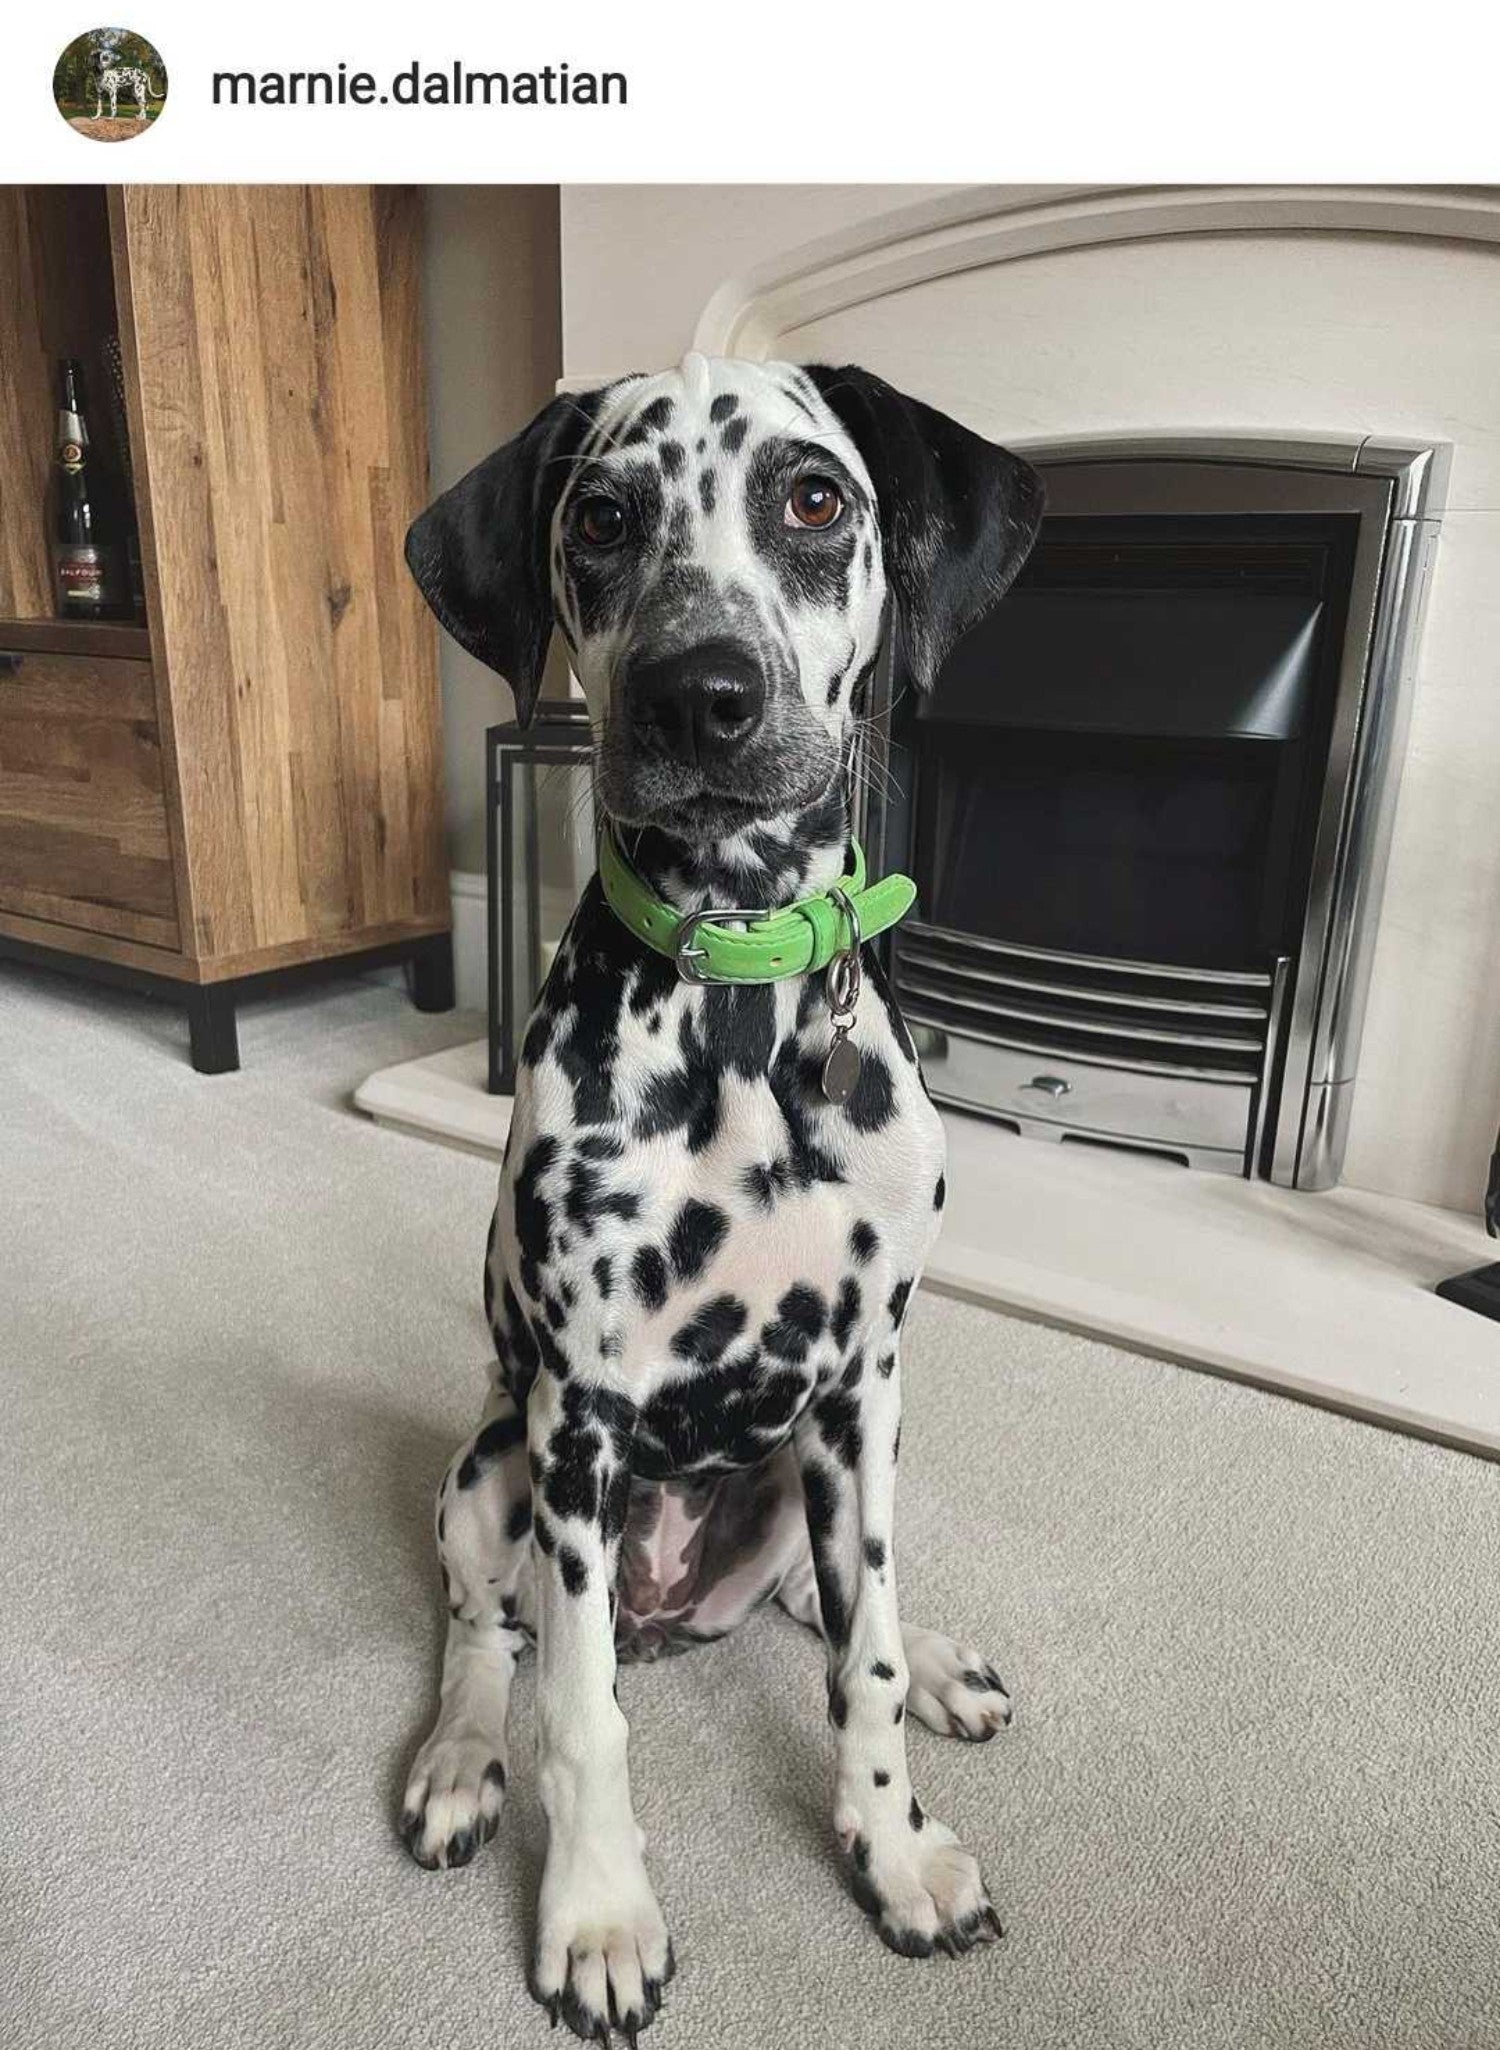 Marnie the Dalmatian Collar in Green, via Instagram